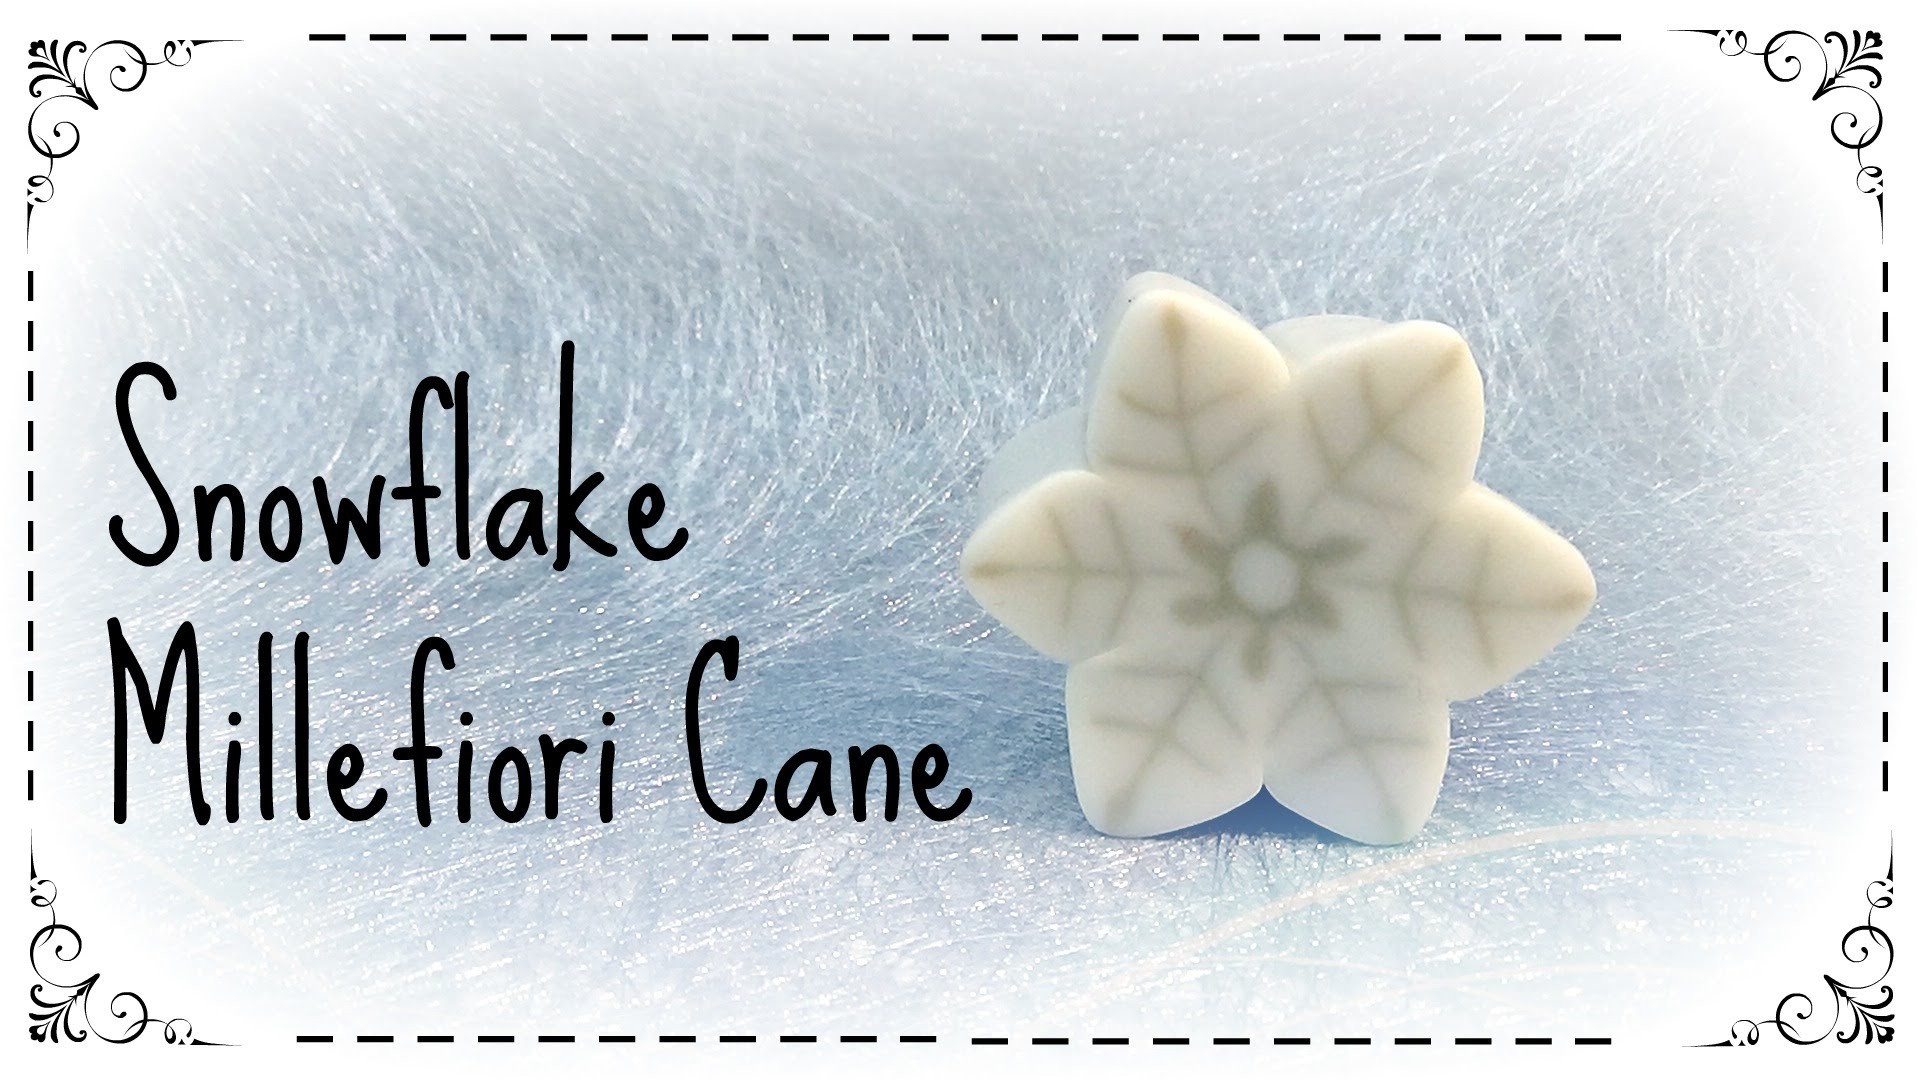 Snowflake millefiori cane - Fimo tutorial murrina fiocco di neve (polymer clay tutorial)